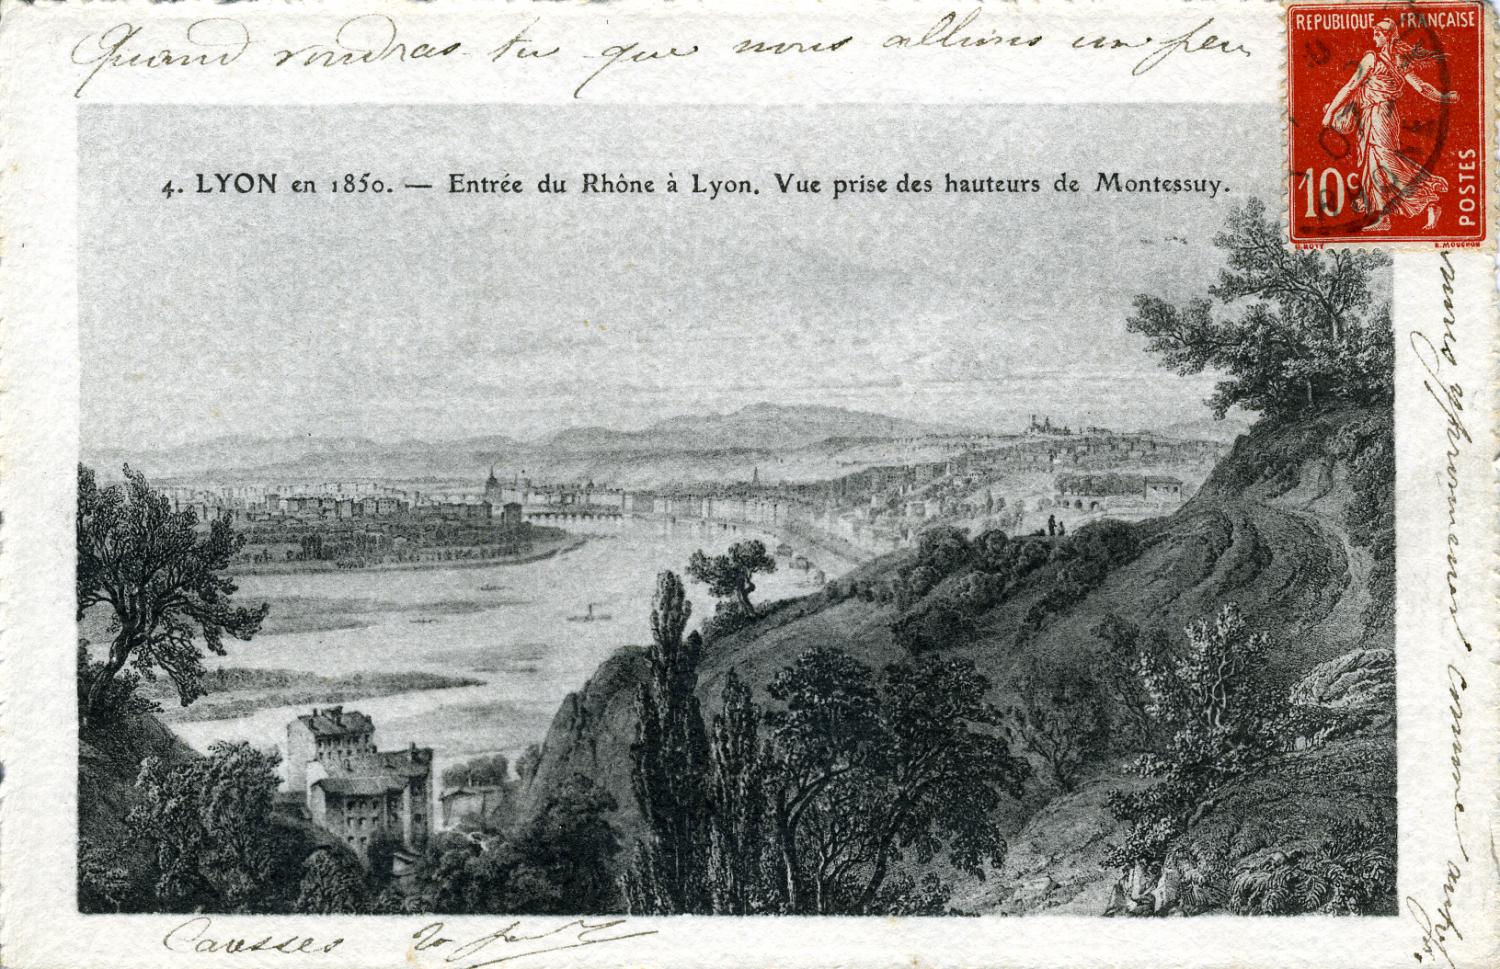 Lyon en 1850. Entrée du Rhône à Lyon.